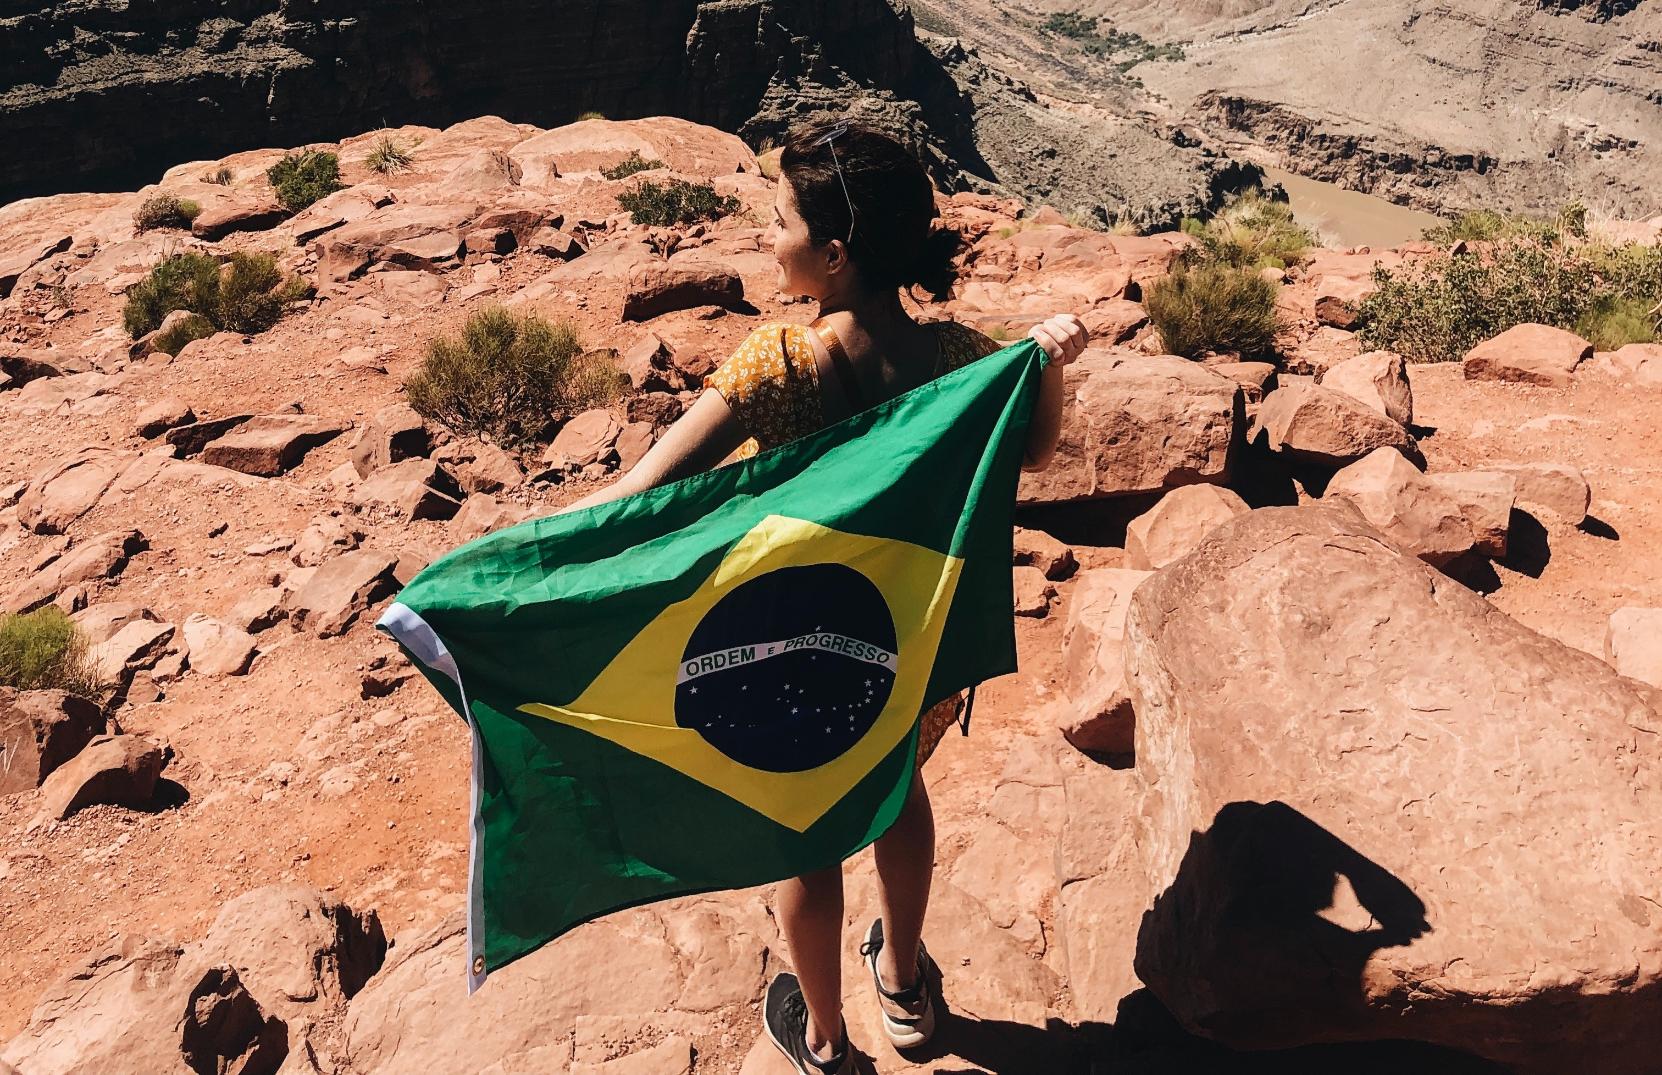 Brazilian Flag.